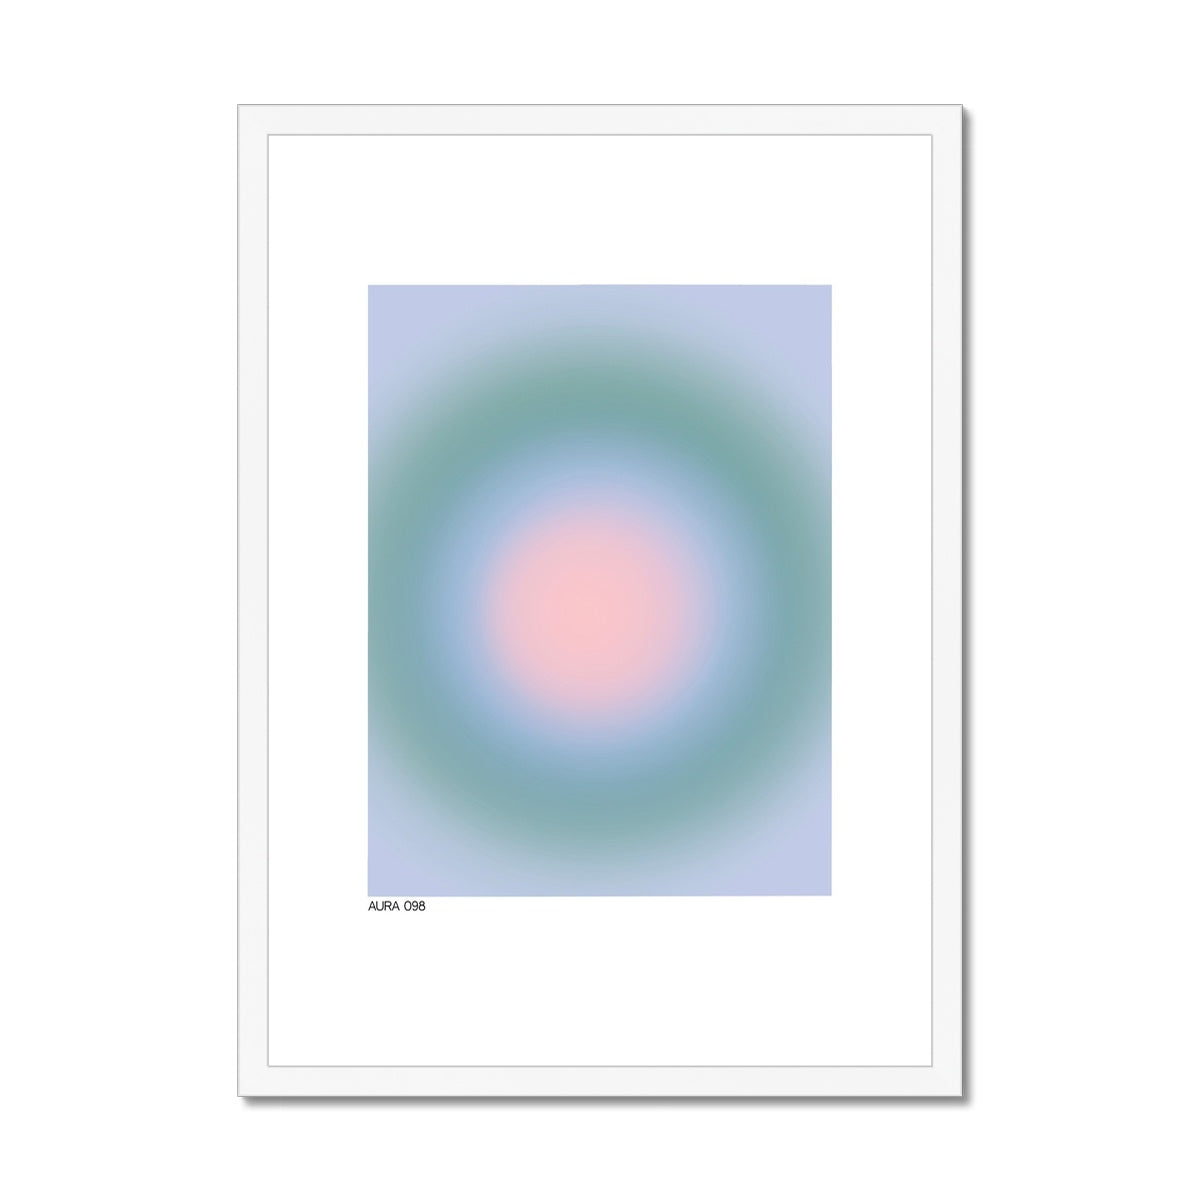 aura 098 Framed & Mounted Print